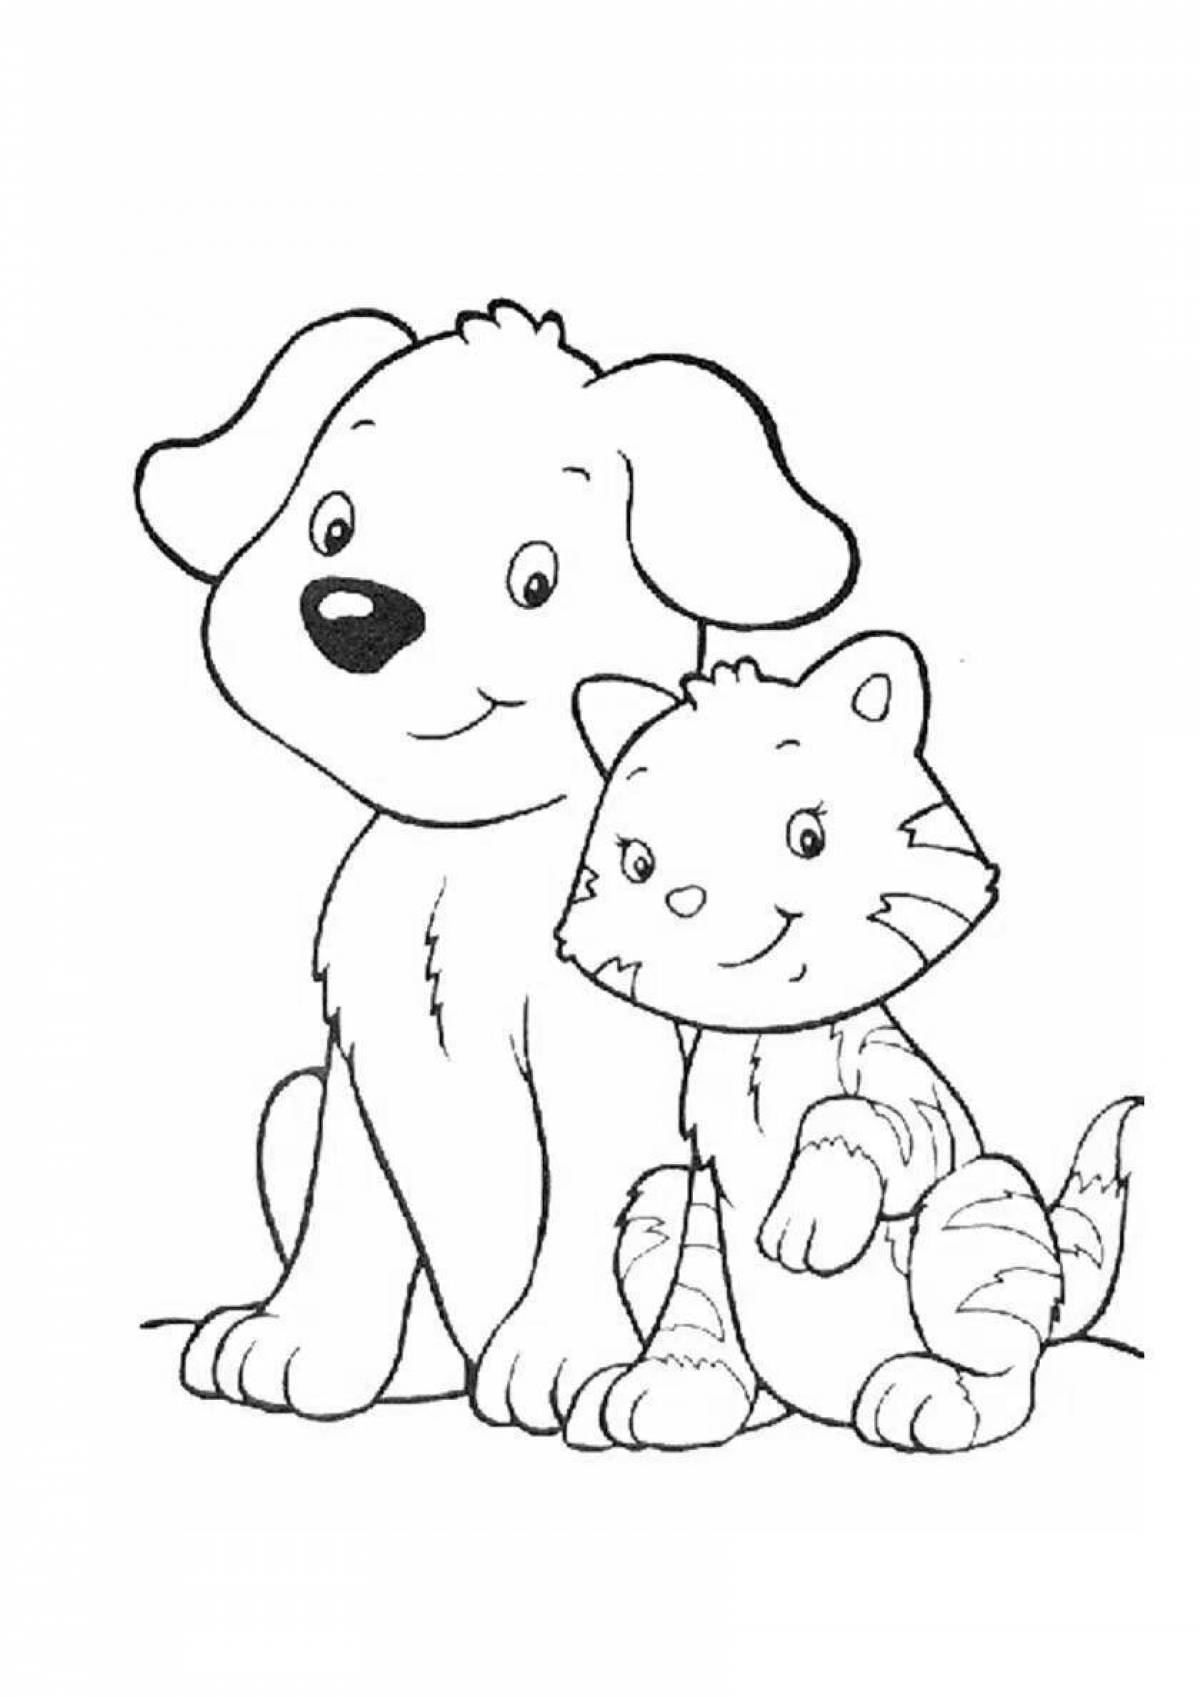 Раскраска кошка и собака вместе